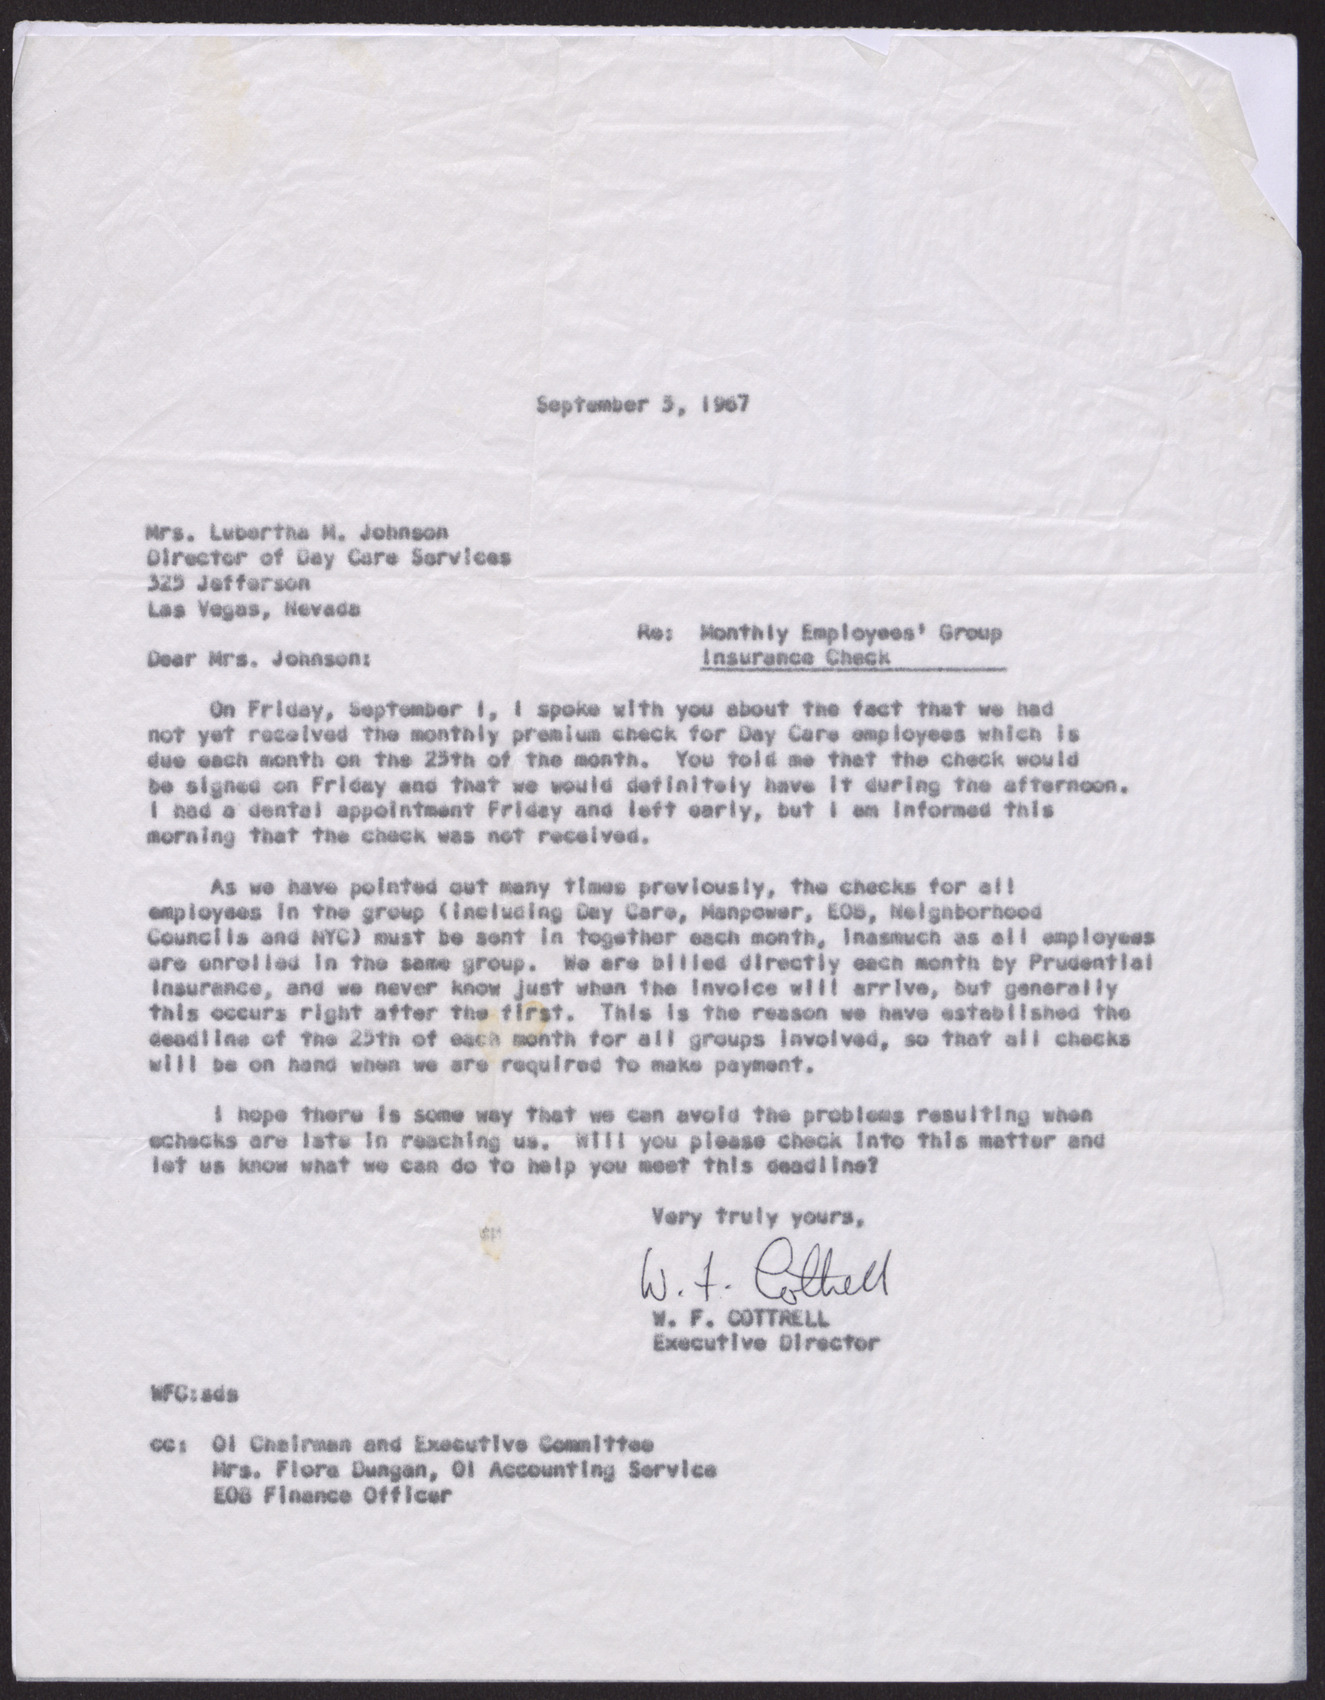 Letter to Mrs. Lubertha M. Johnson from W. F. Cottrell, September 5, 1967